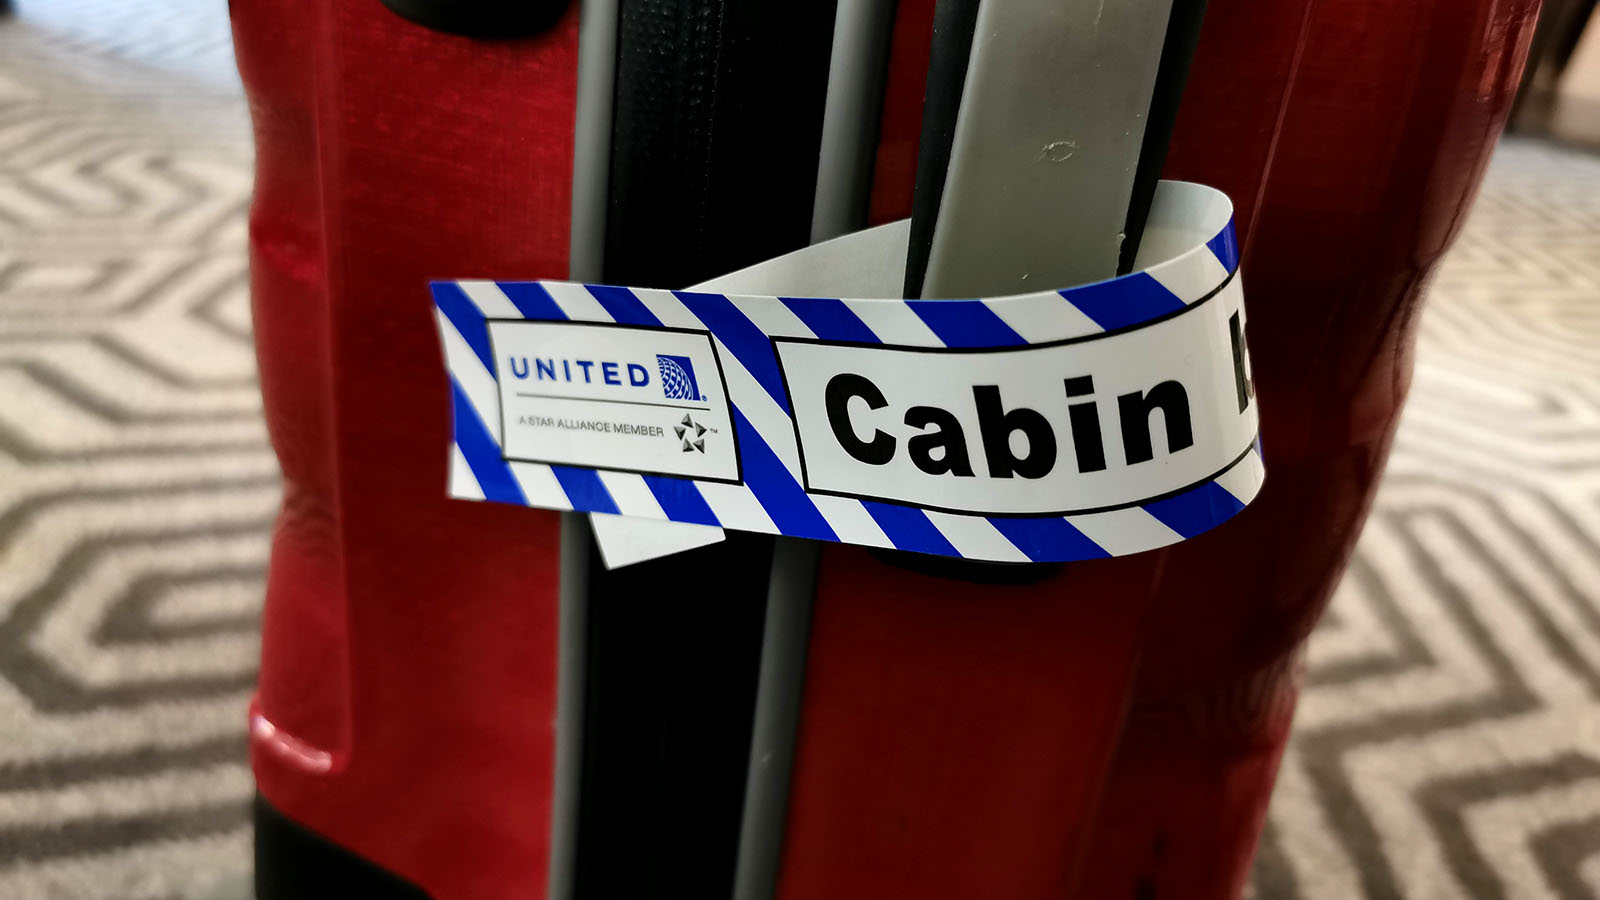 United cabin bag sticker